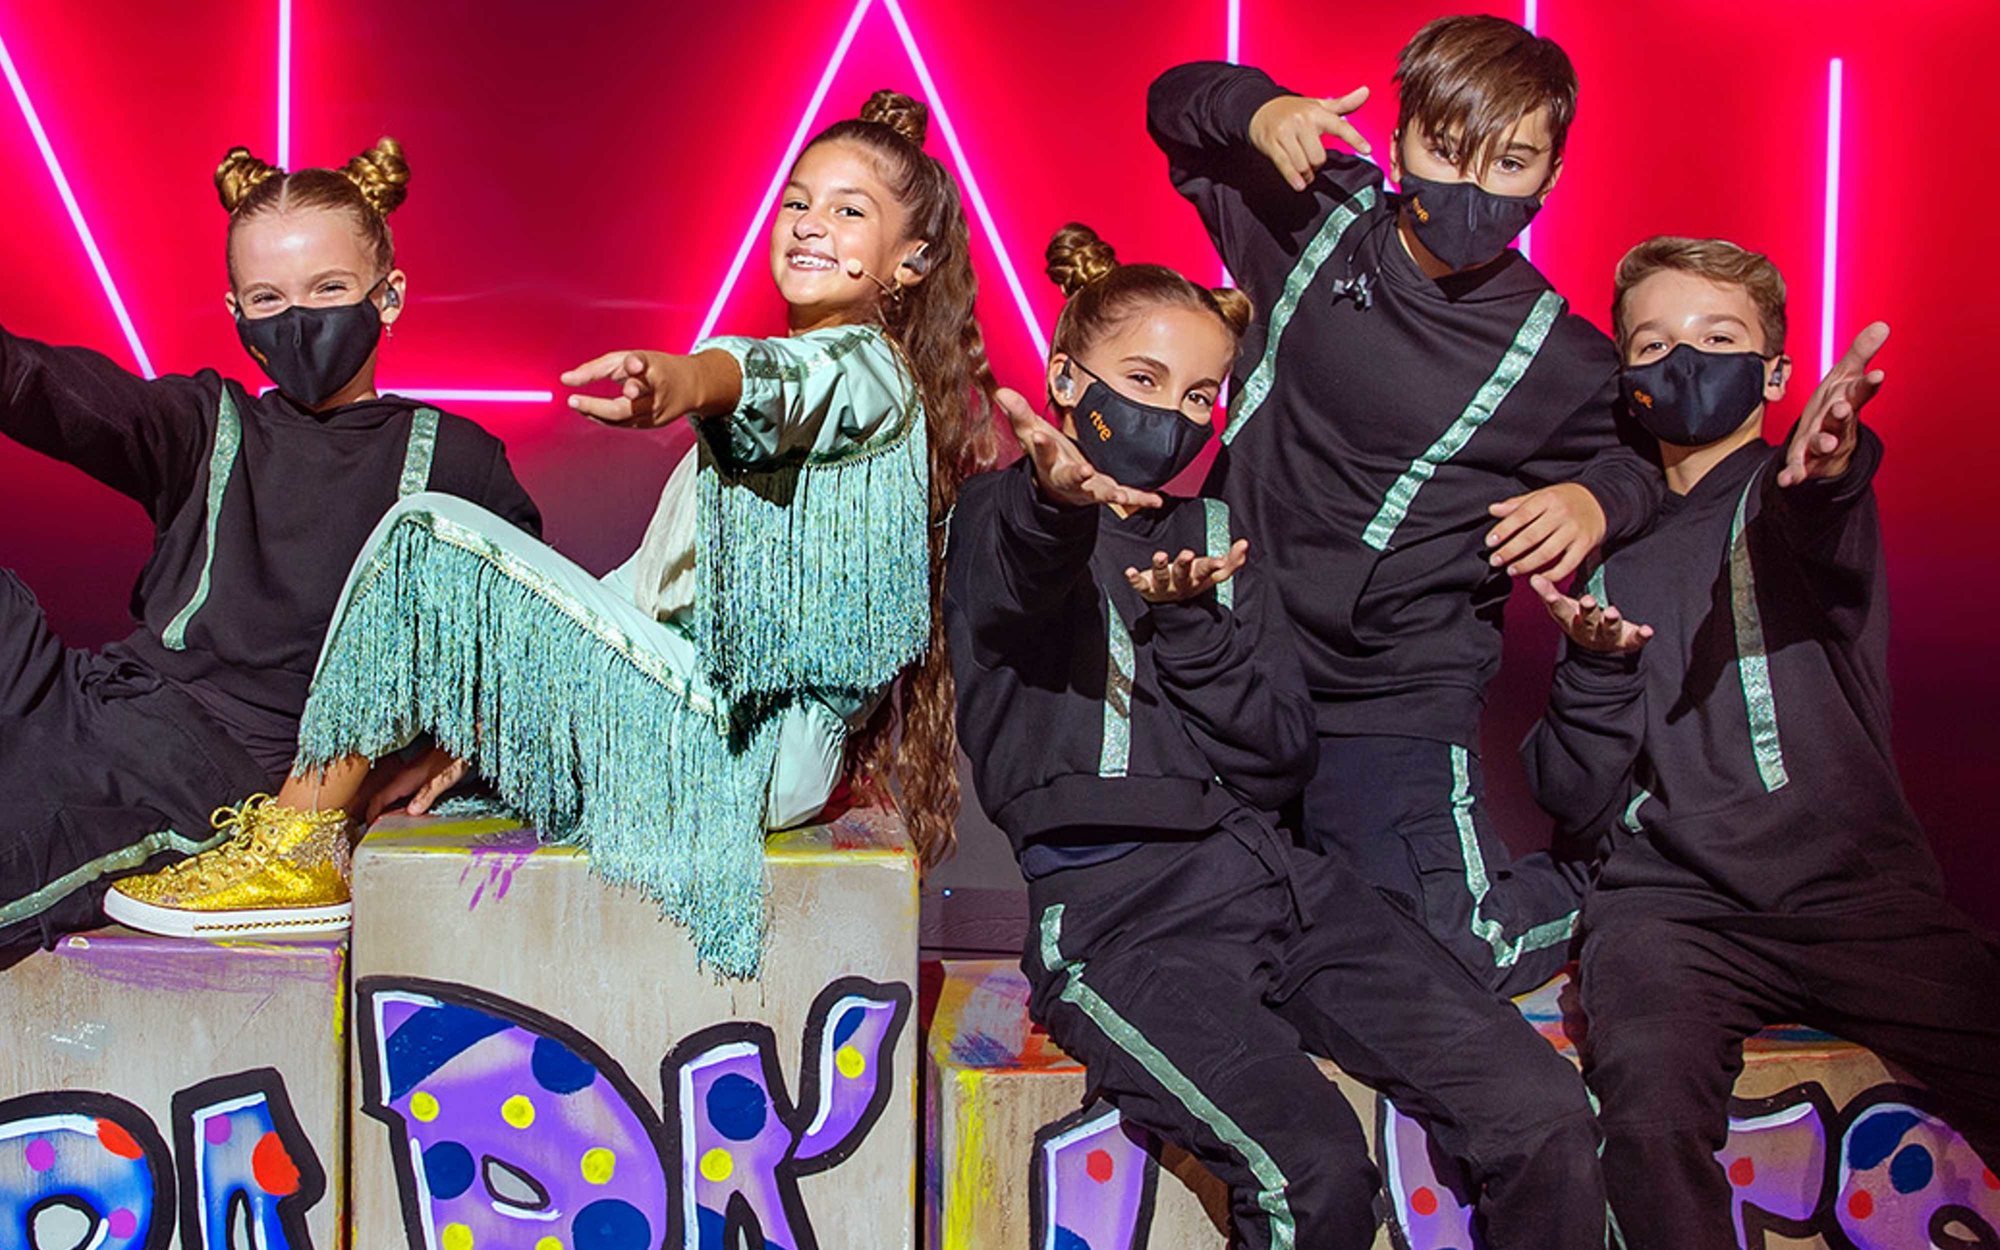 TVE quiere organizar Eurovisión Junior 2021 si Soleá gana: "No tenemos miedo"